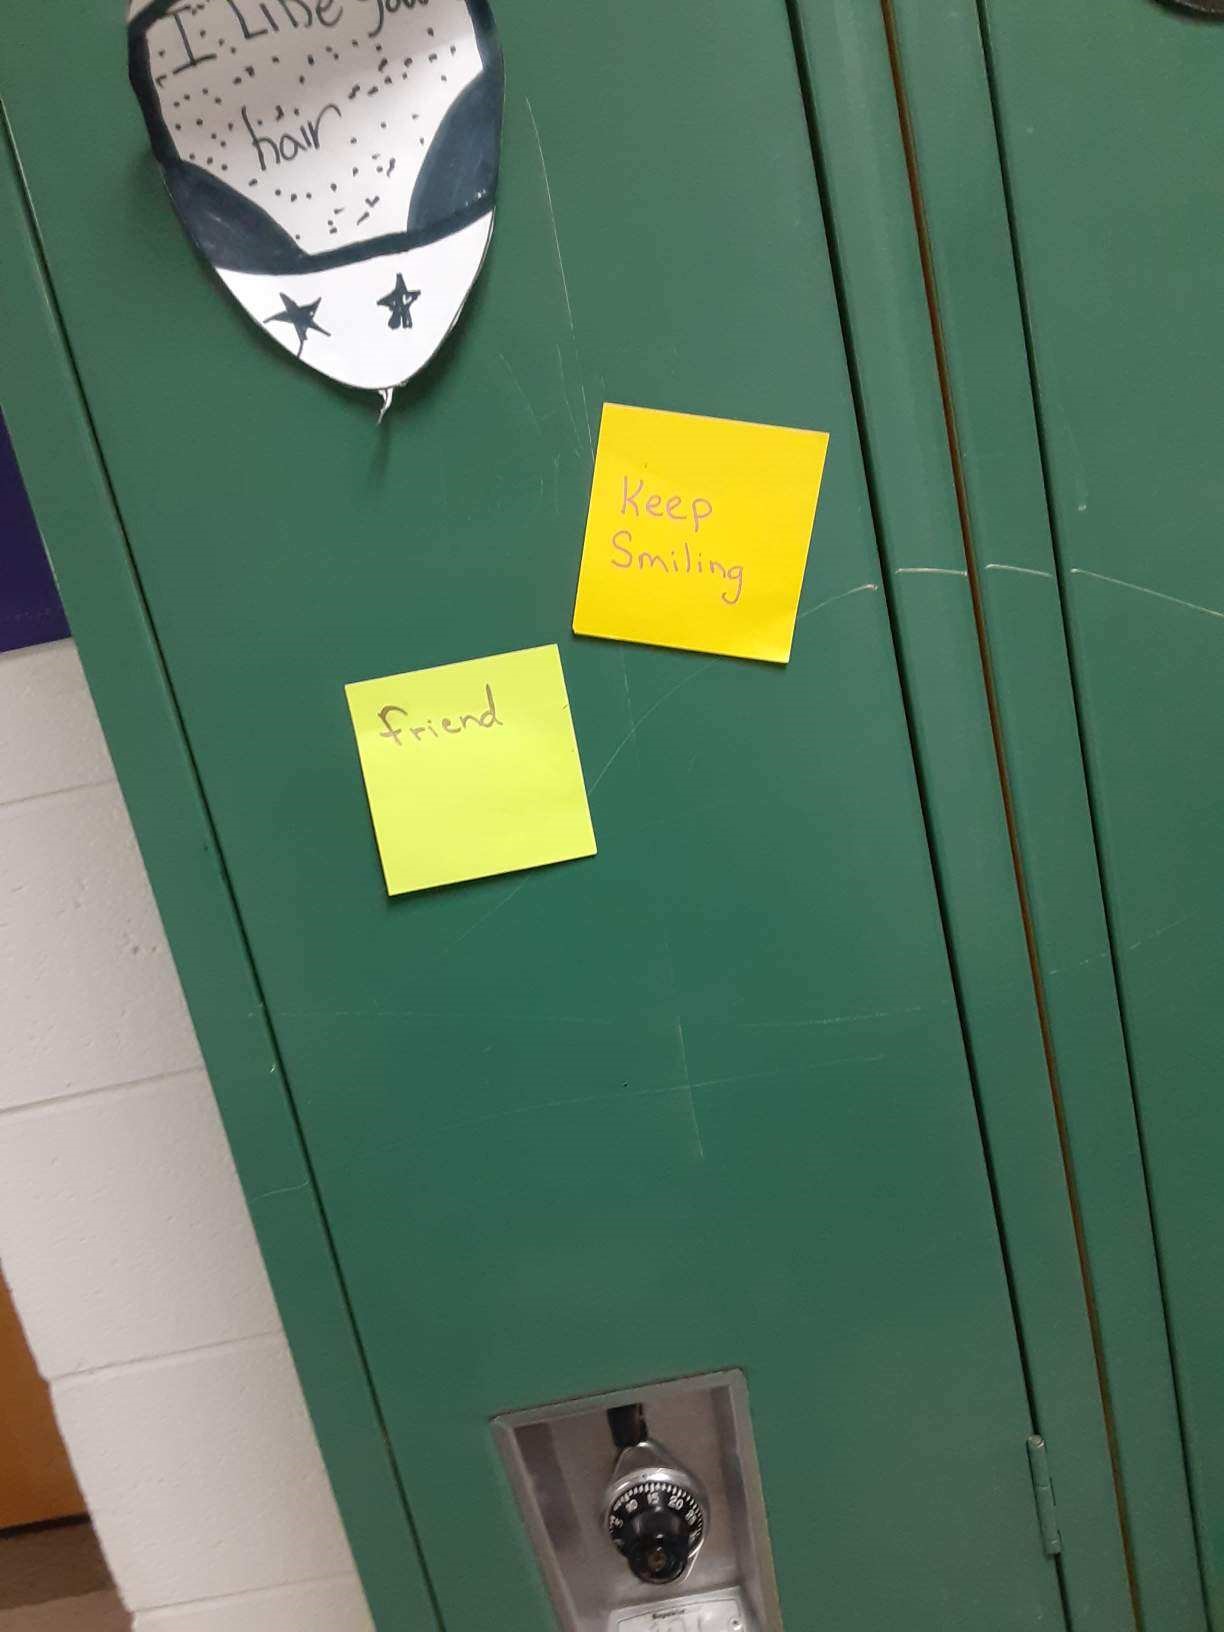 Post-it notes left on a locker.